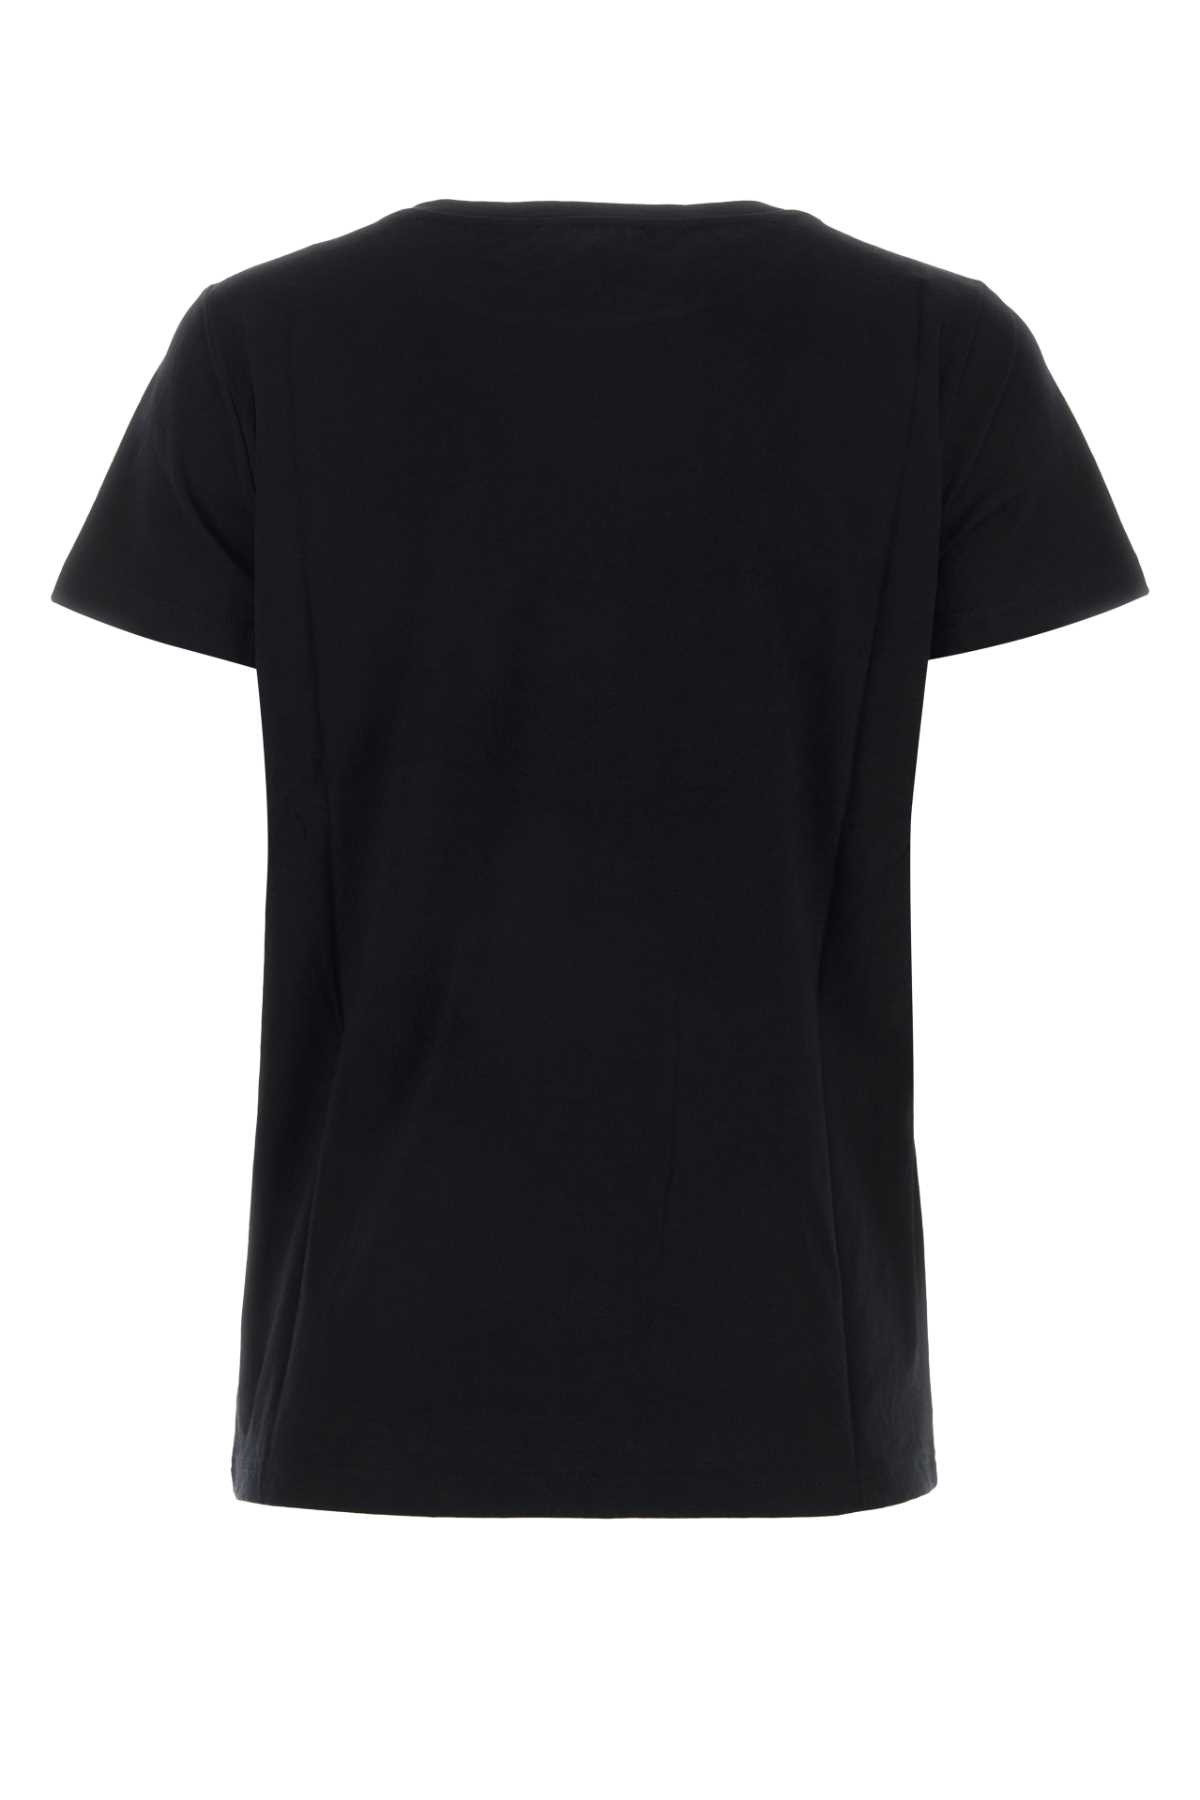 Apc Black Cotton Item T-shirt In Iak